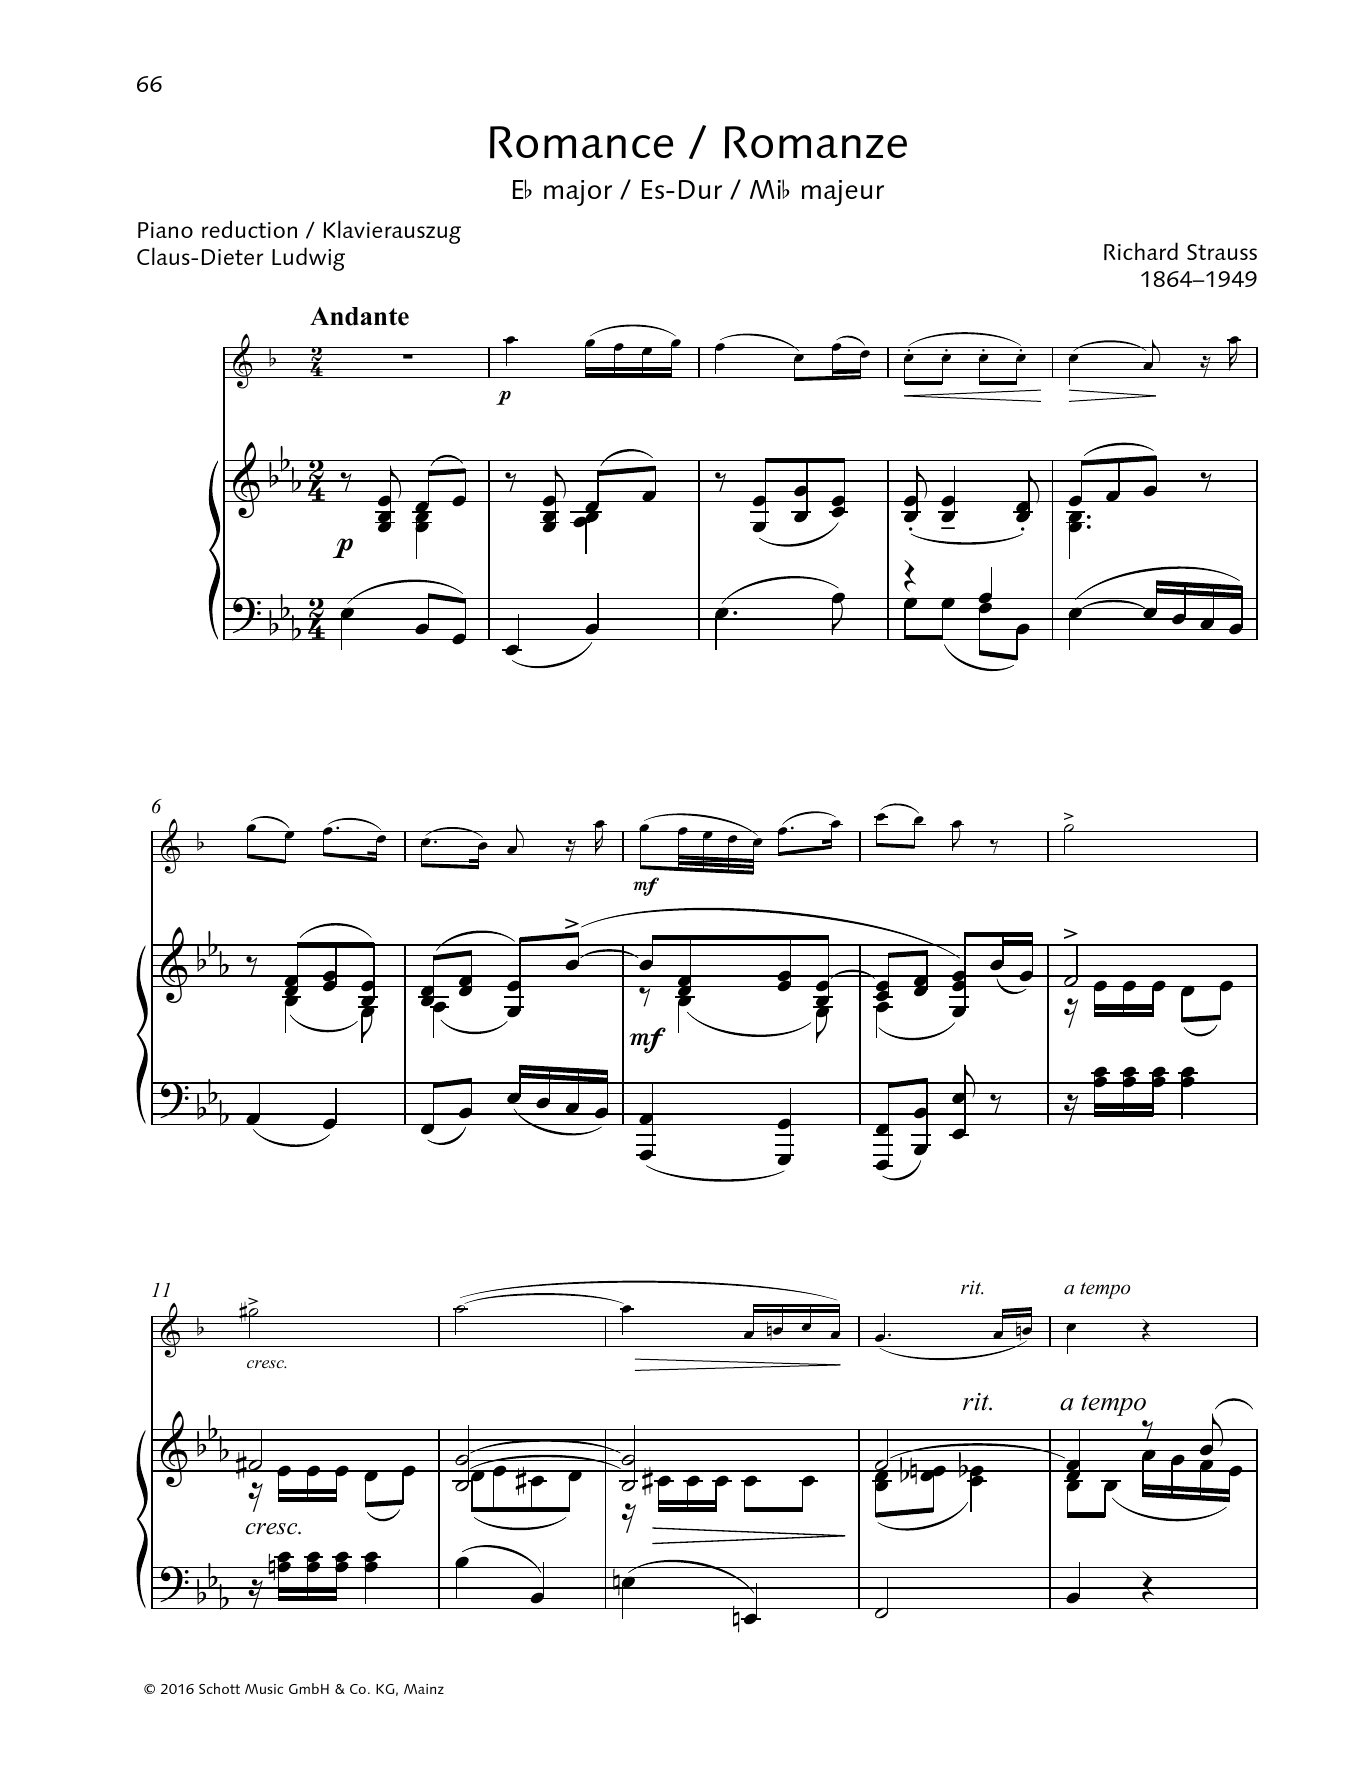 Download Richard Strauss Romance E-flat major Sheet Music